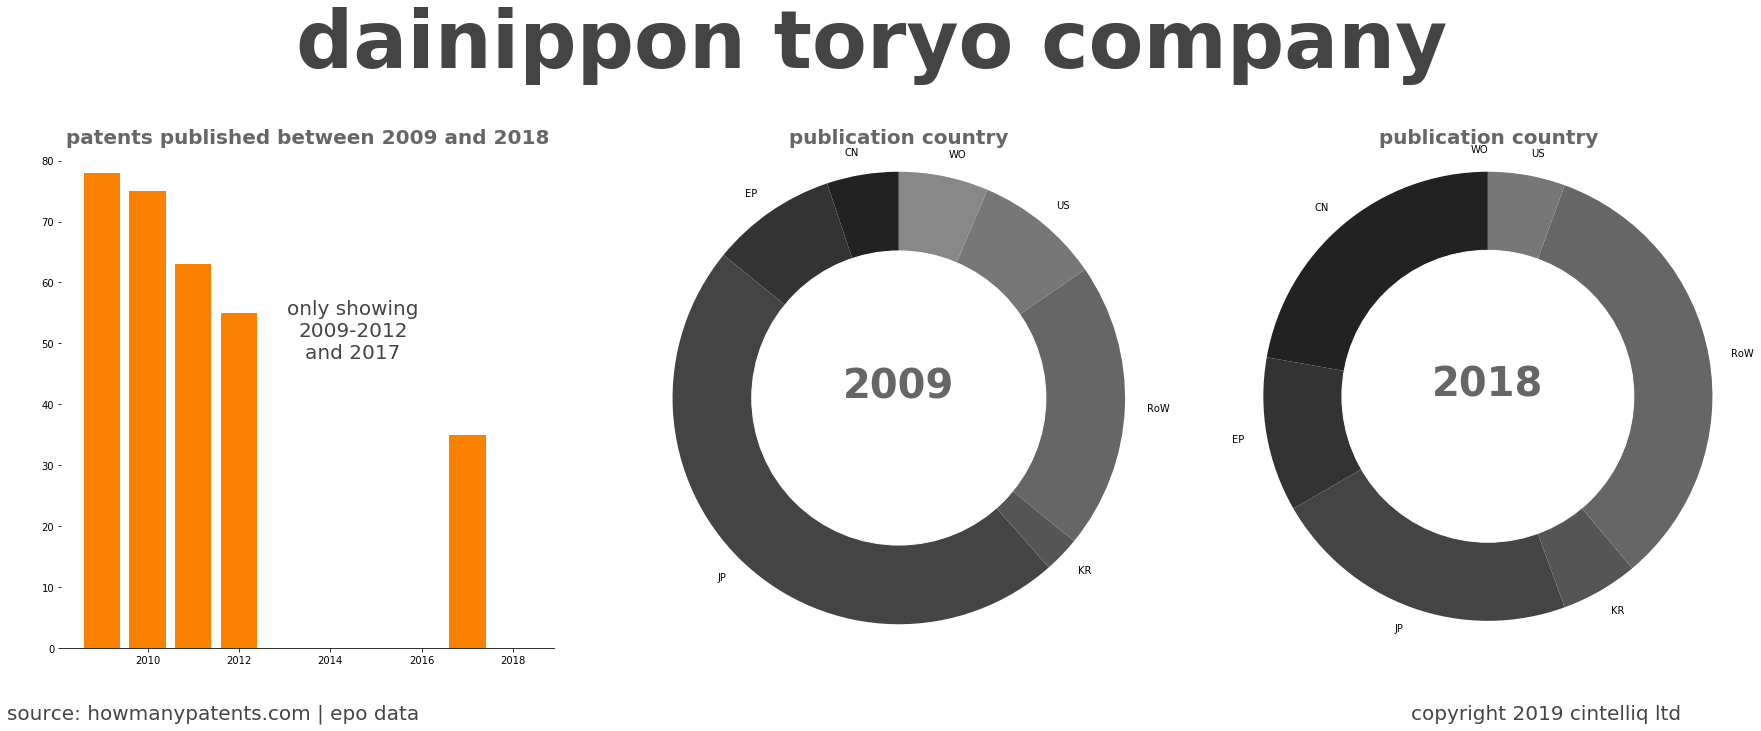 summary of patents for Dainippon Toryo Company